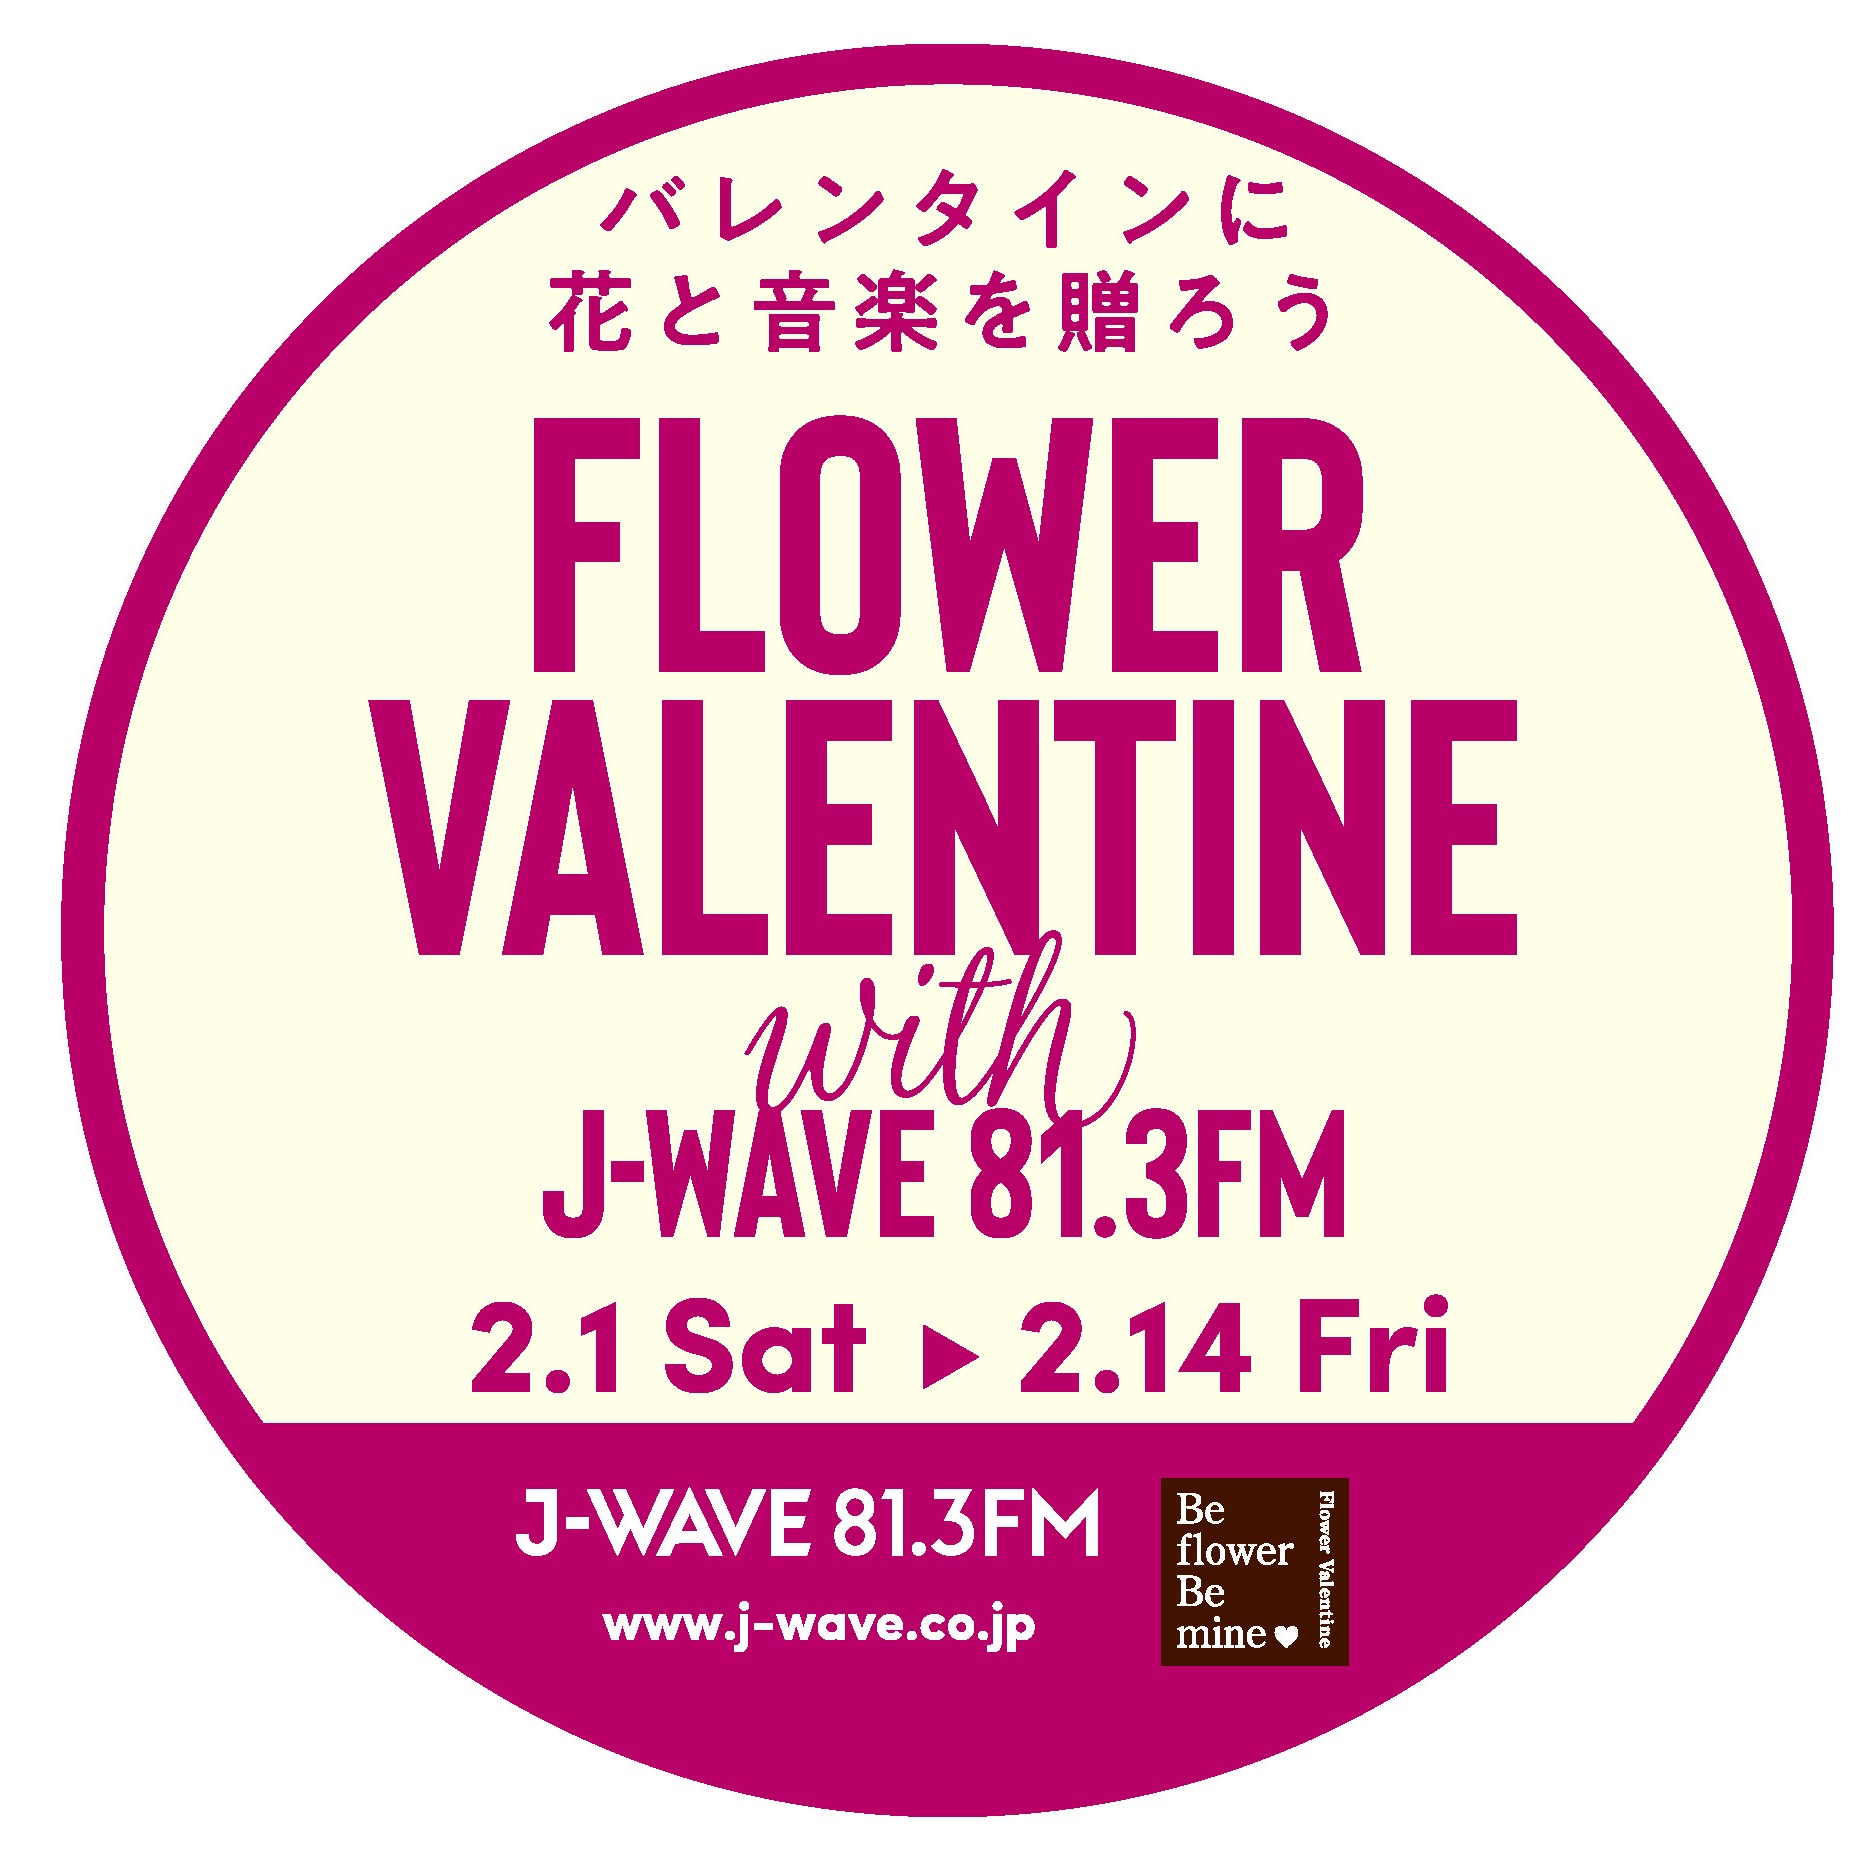 FLOWER VALENTINE with J-WAVE